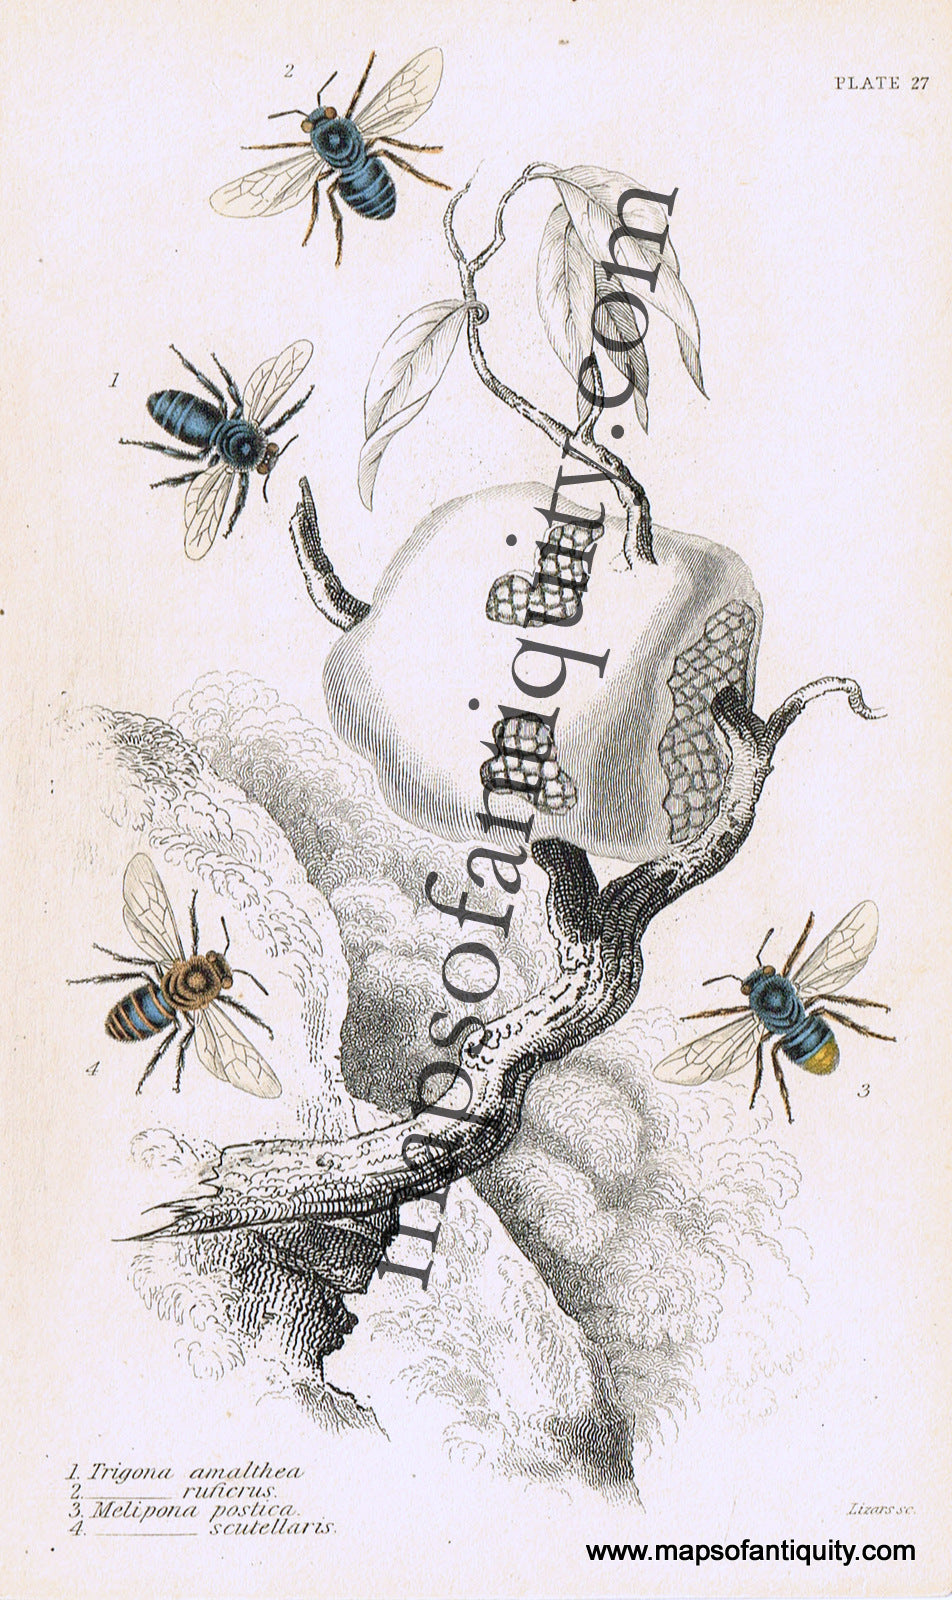 Antique-Hand-Colored-Print-Trigona-amalthea-Trigona-ruficrus-Melipona-postica-Melipona-scutellaris-Antique-Prints-Natural-History-Insects-1840-Duncan-Maps-Of-Antiquity